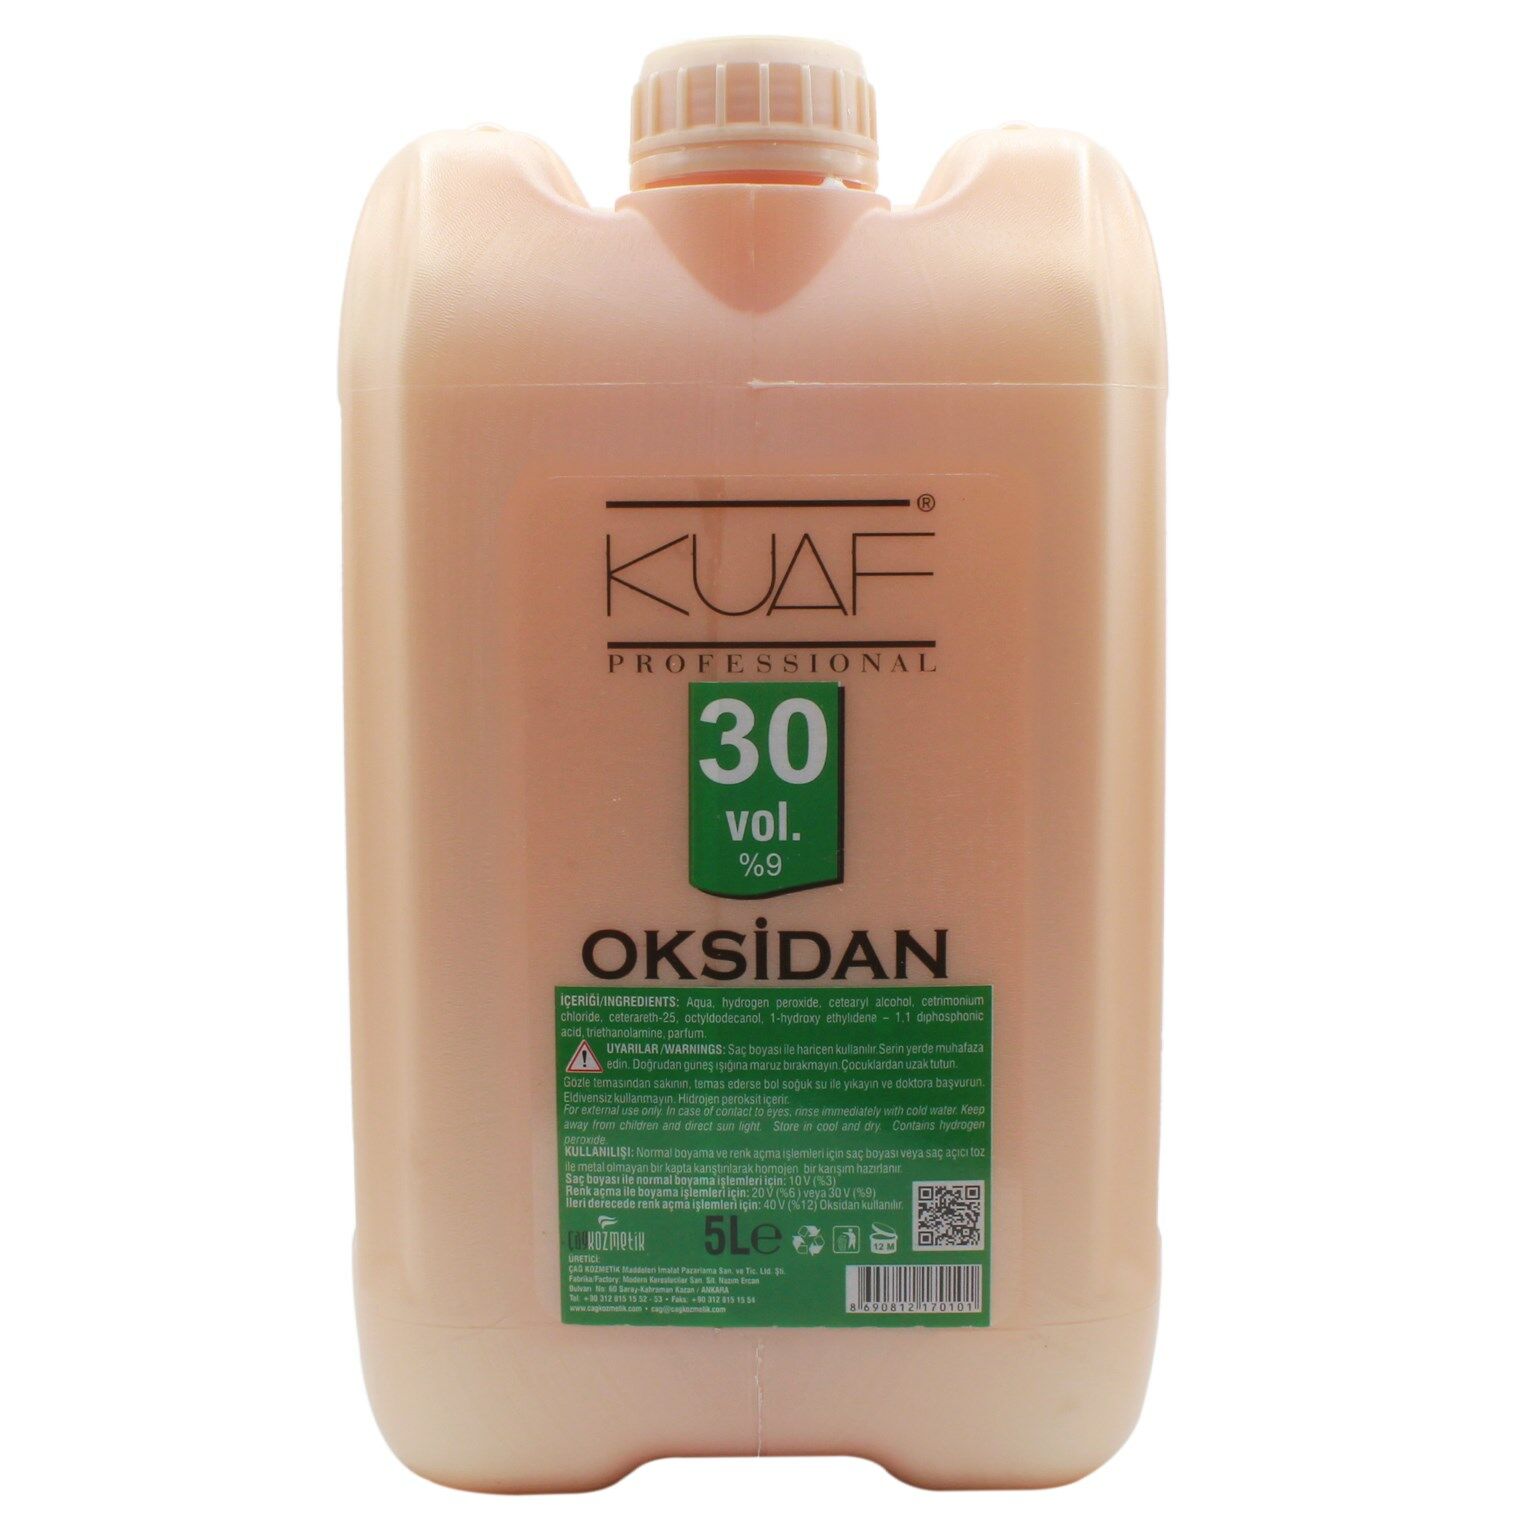 Kuaf Oksidan - 30 Volume %9 5000 Ml.